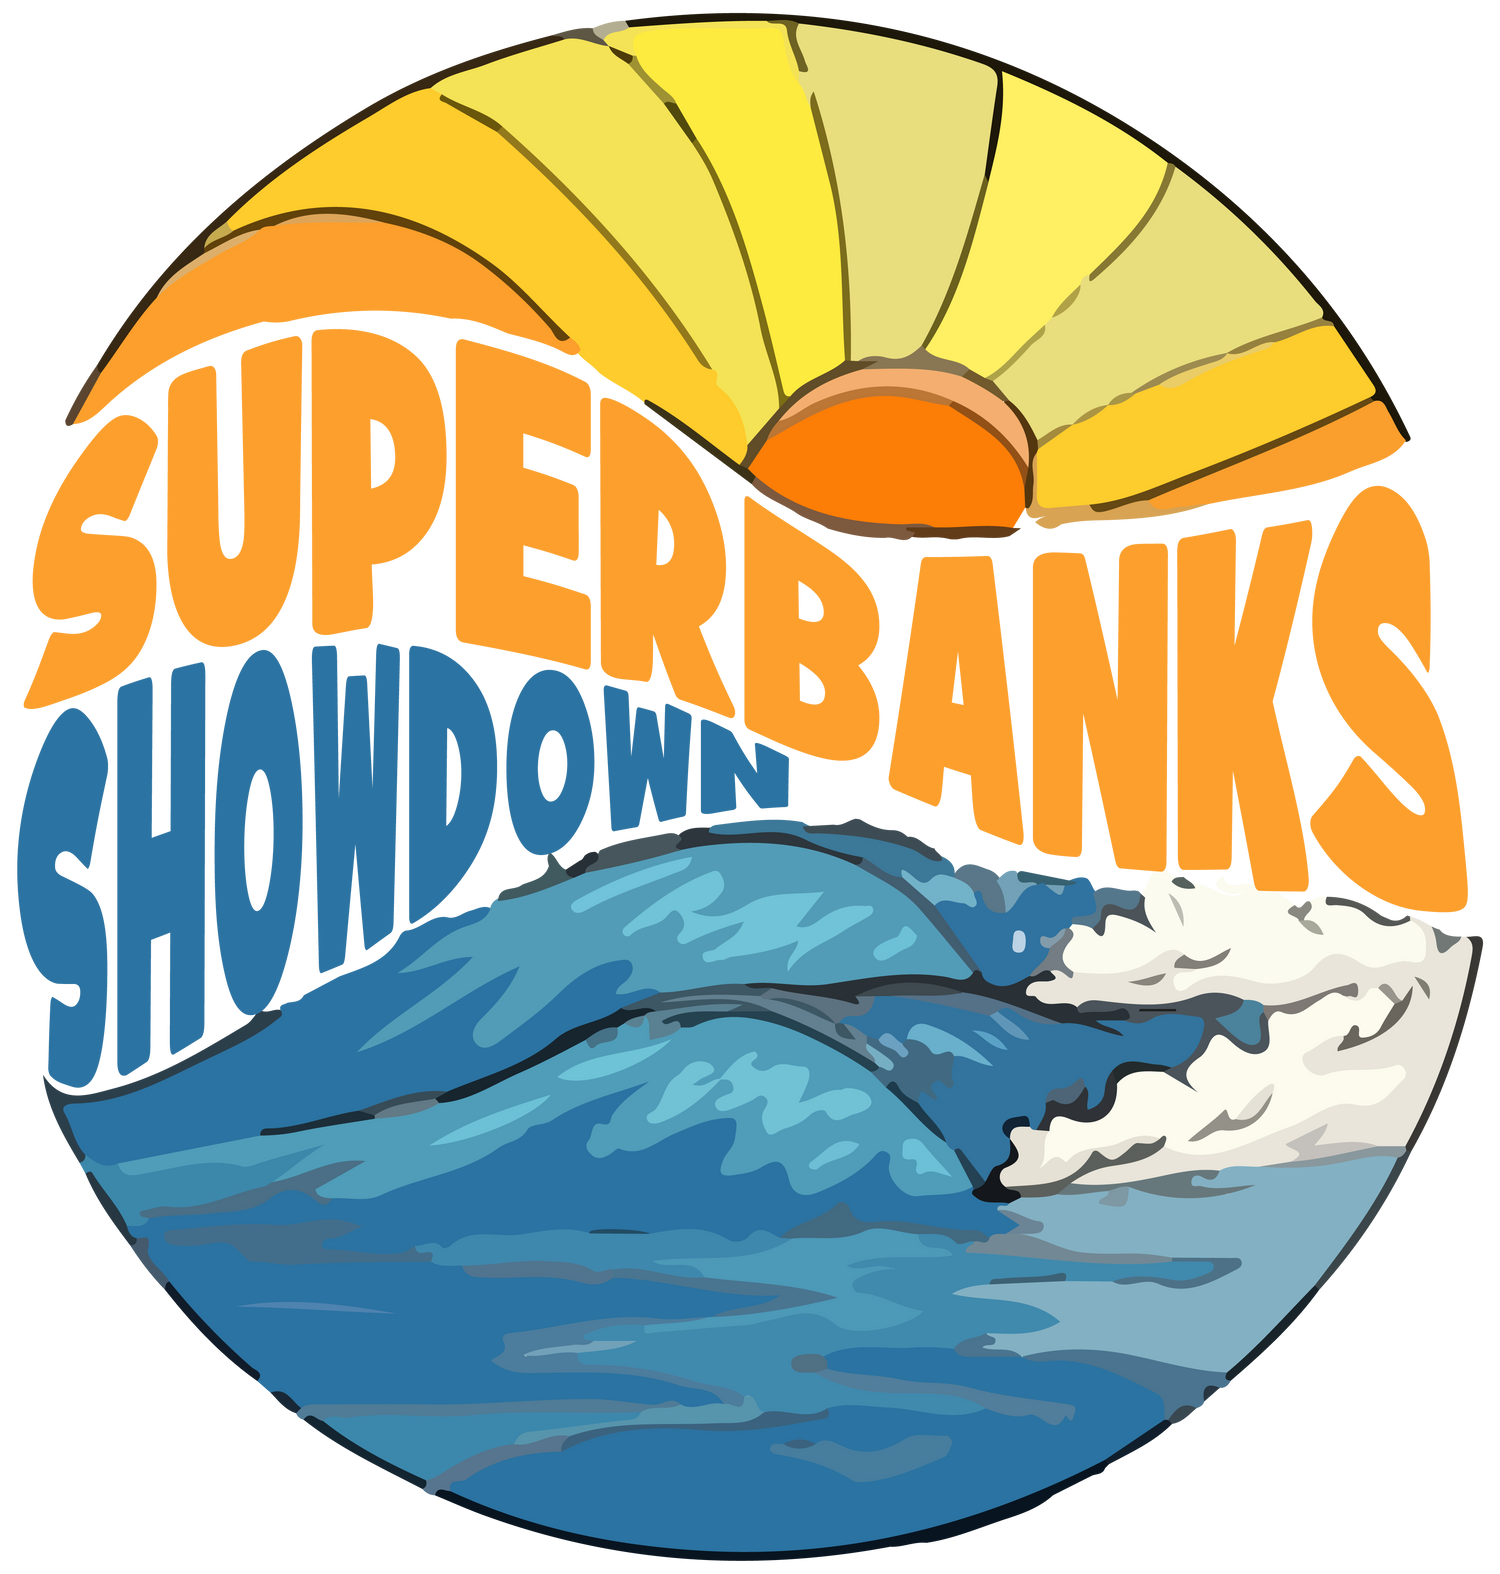 Super Banks Showdown FF